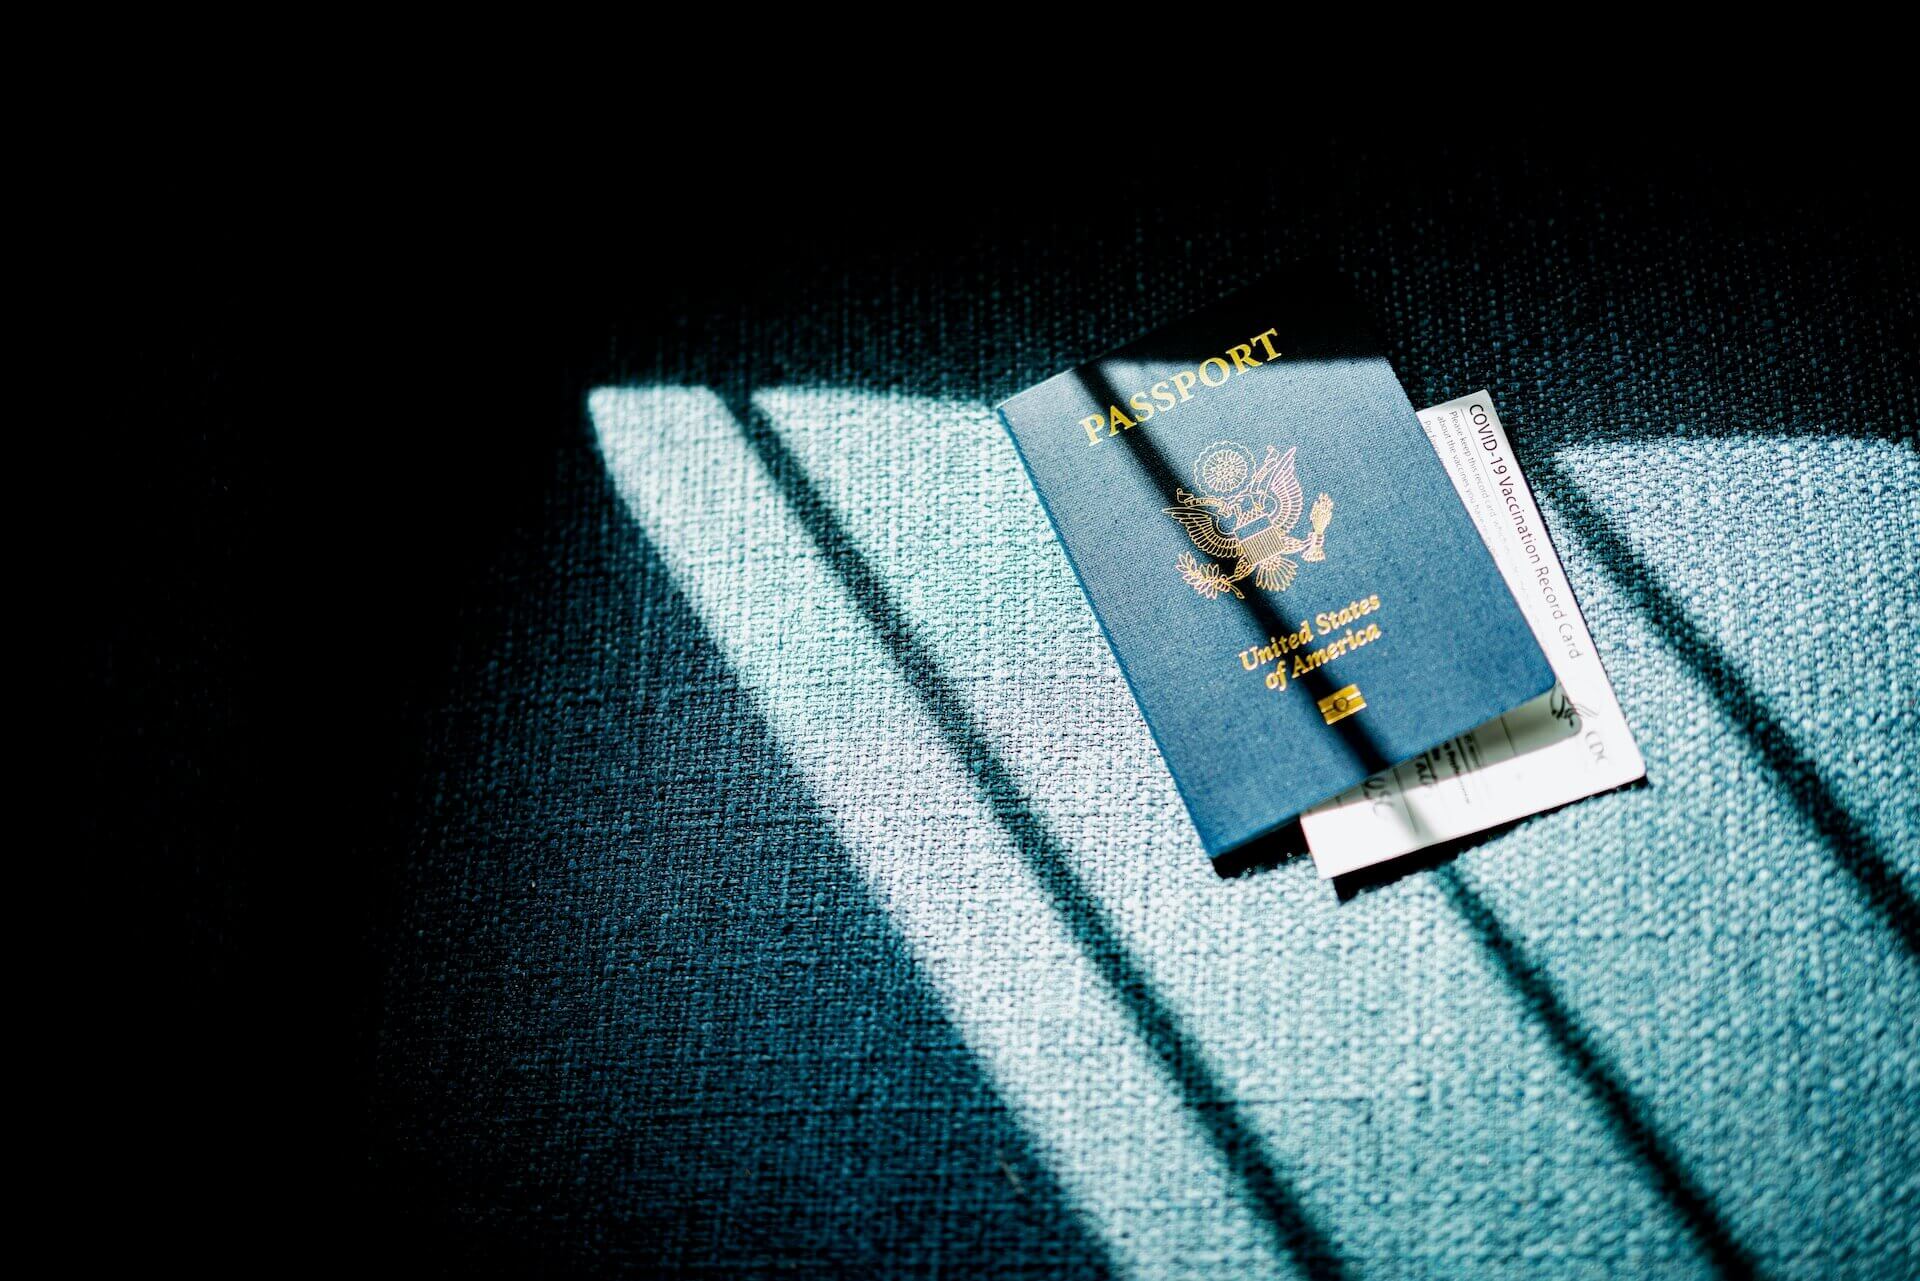 USA passport on a dark surface